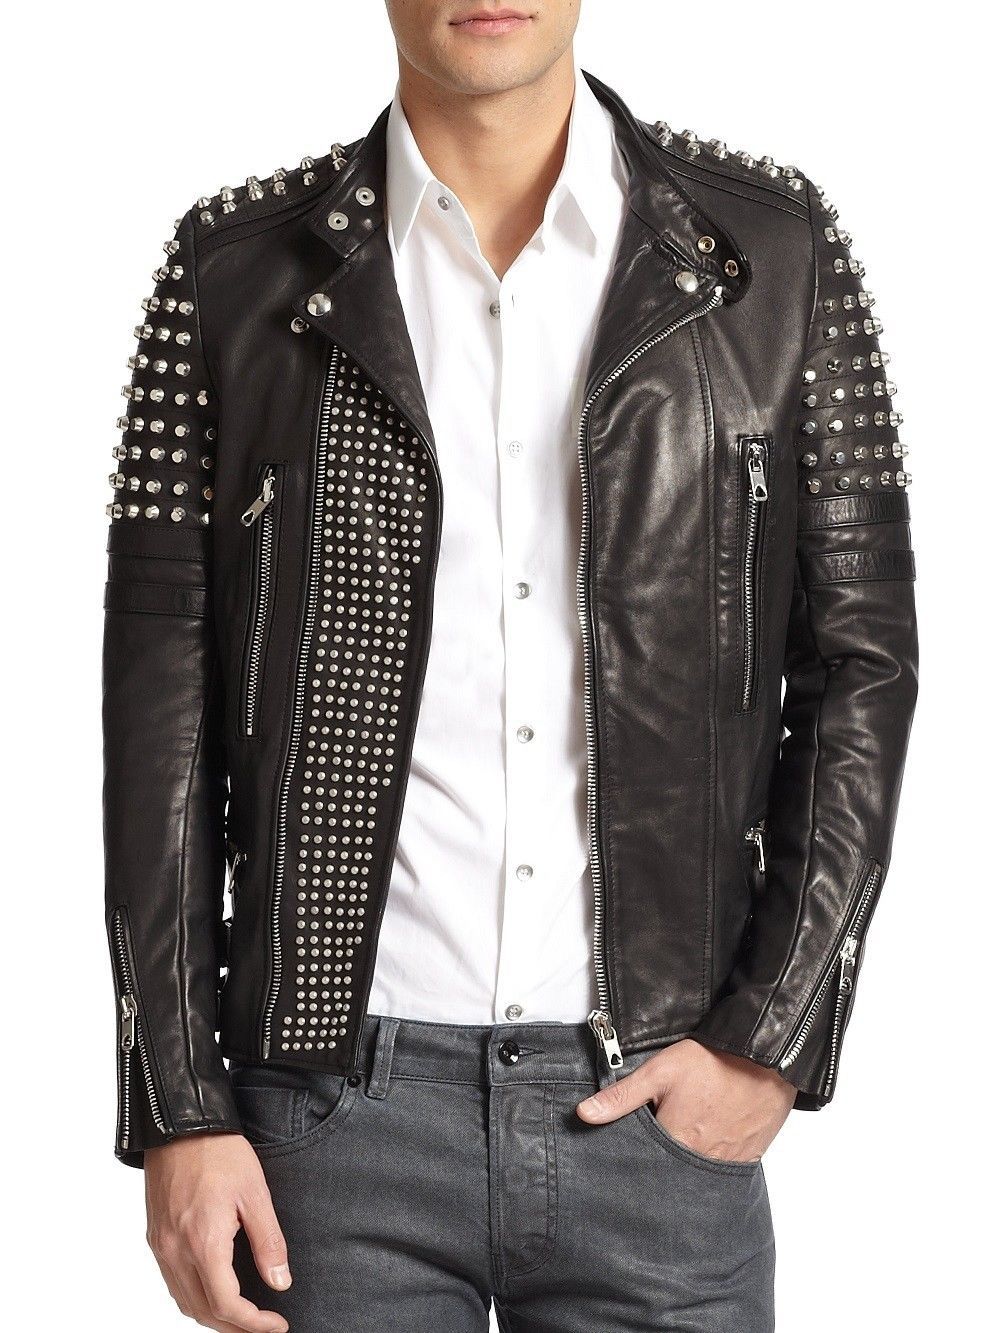 Handmade Men's Studded Leather Jacket Silver Studded Biker Front Sleeves Zipper